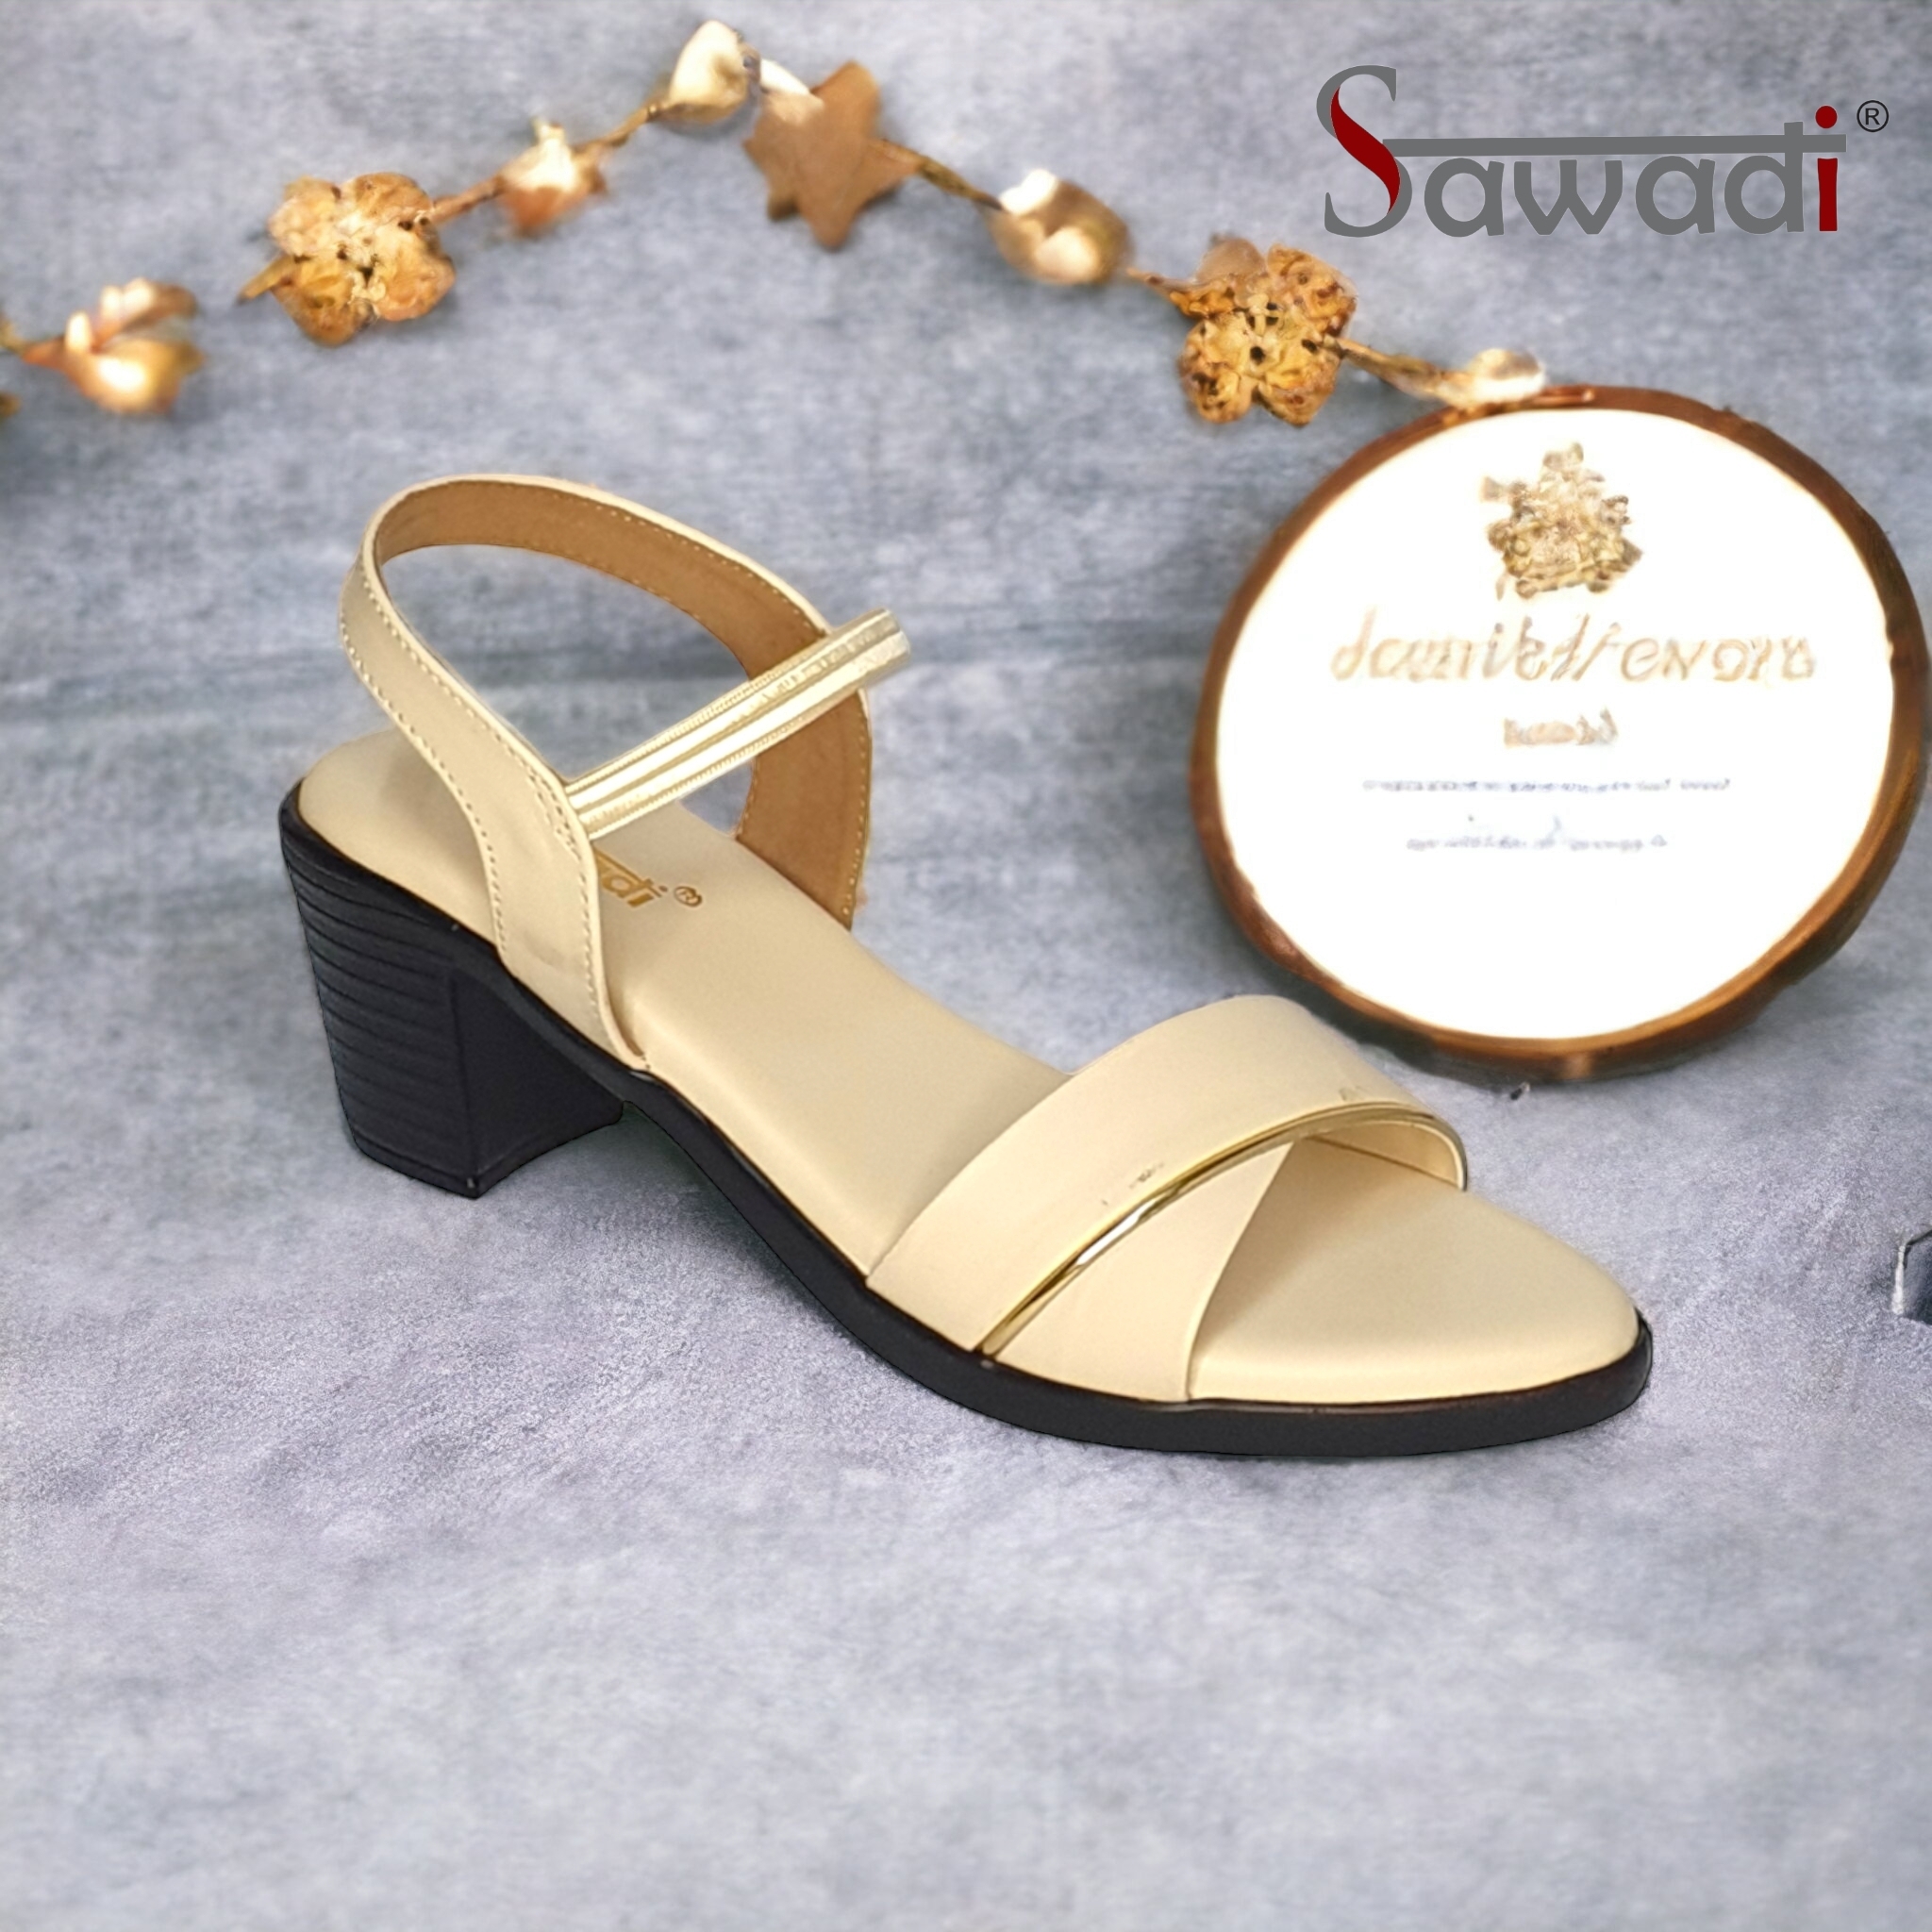 Sawadi Women Heel sandals